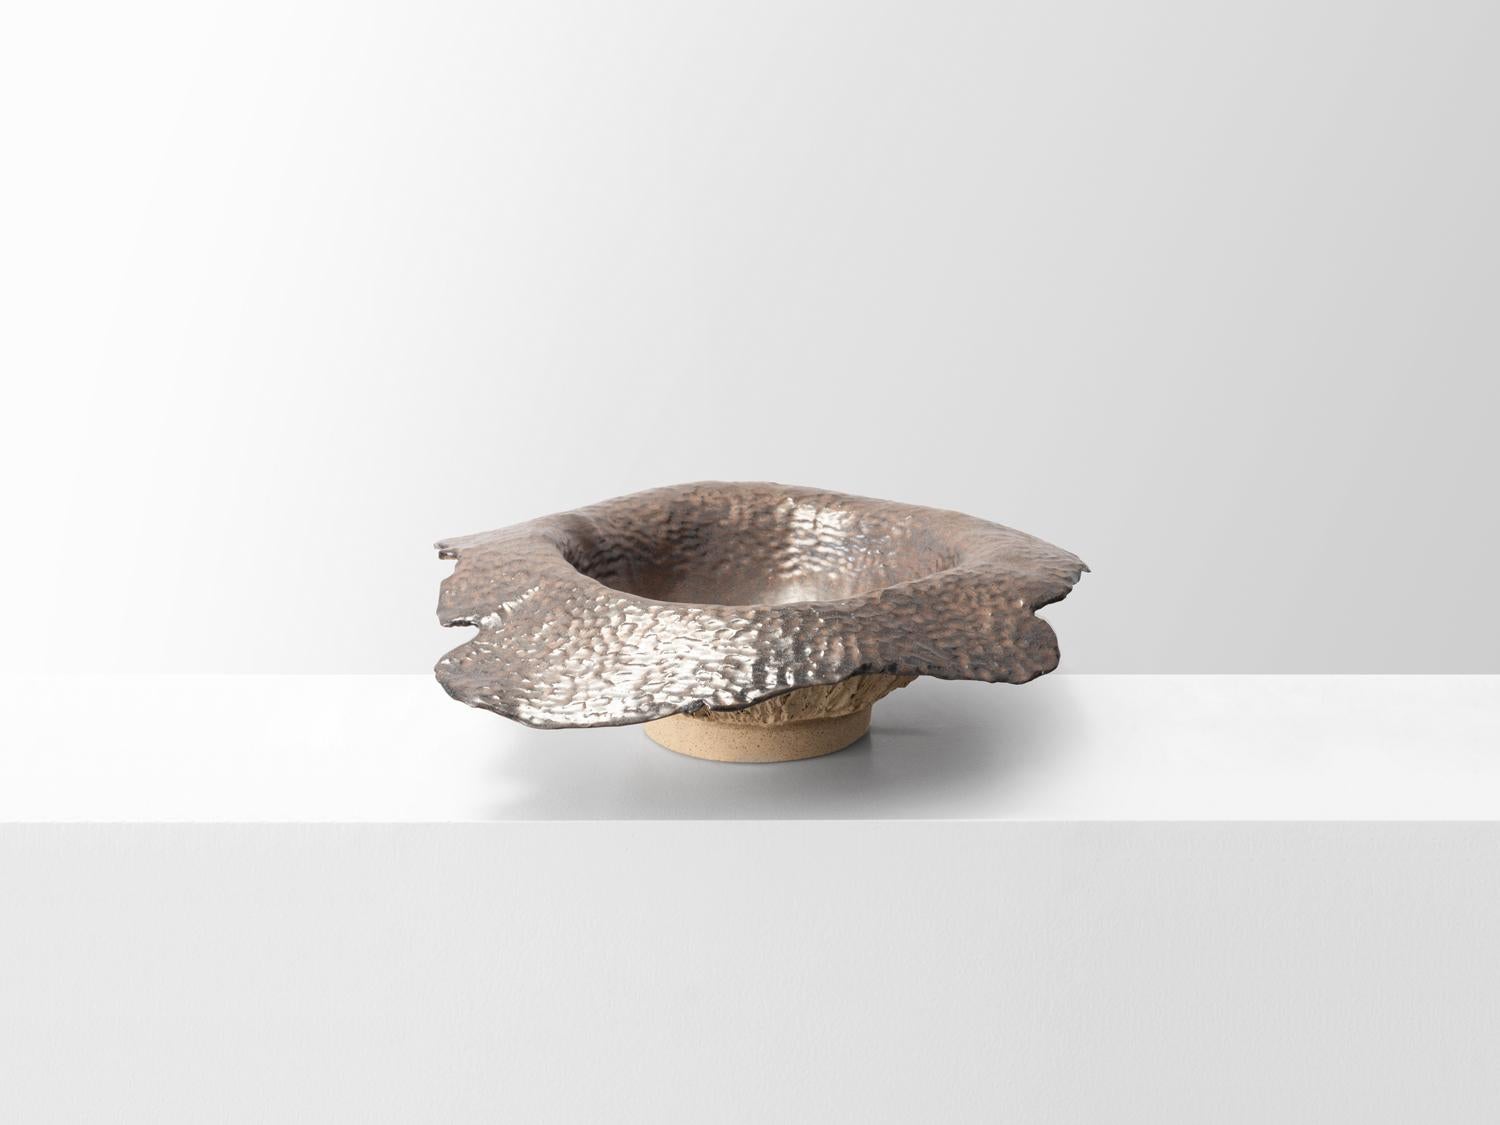 Trish DeMasi.
Victoria Bowl, 2022.
Metallic glazed speckled stoneware.
Measures: 5.25 x 21 x 20 in